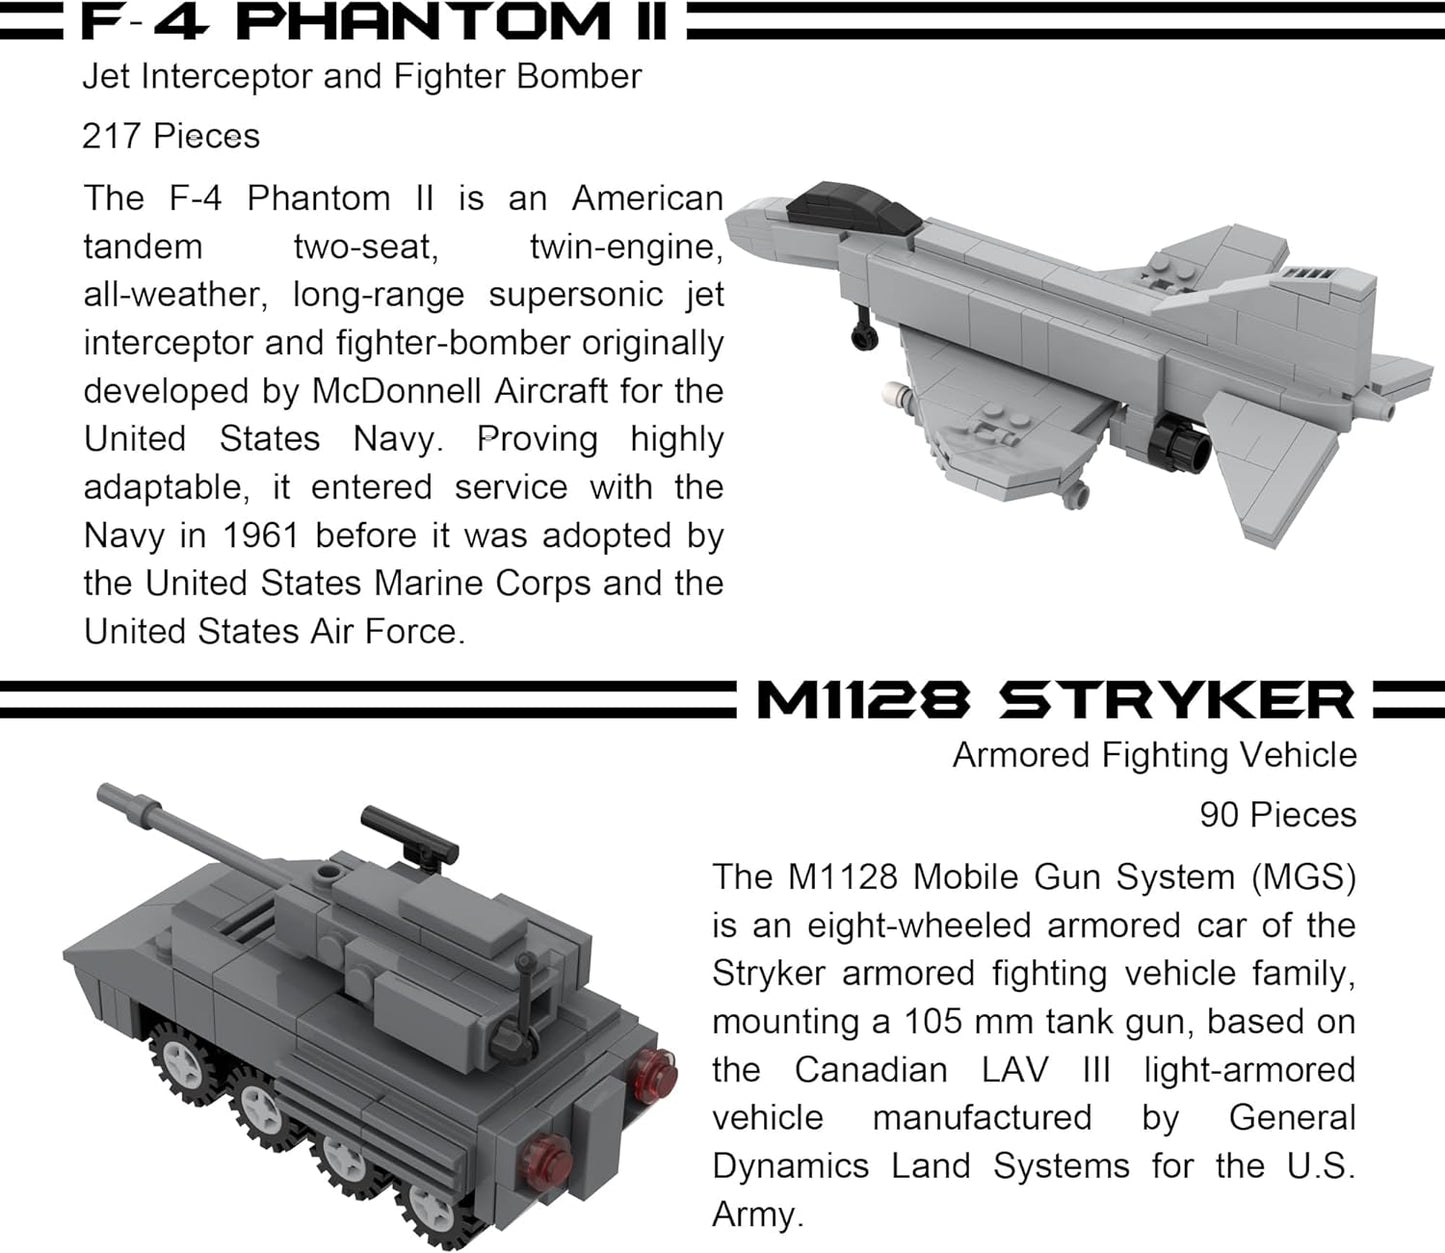 5 Military Building Block Sets (A-10 Thunderbolt II, F-4 Phantom II, M109 Paladin, M1128 Stryker, & V-22 Osprey) - 901 Pieces